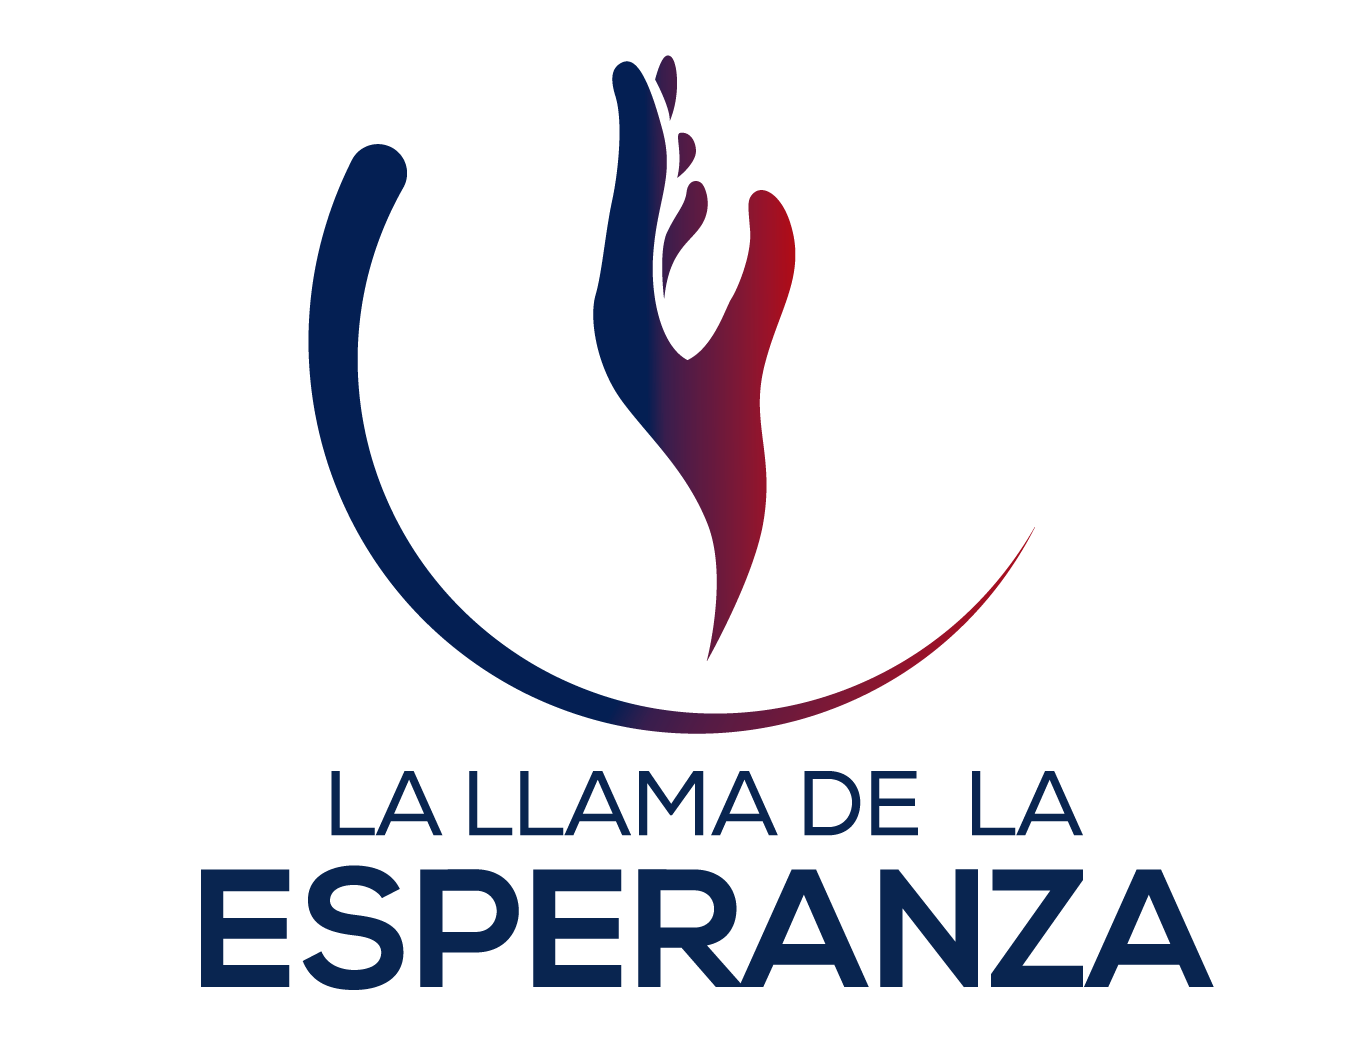 Esperanza Logo - LOGO LLAMA DE LA ESPERANZA 2018 01